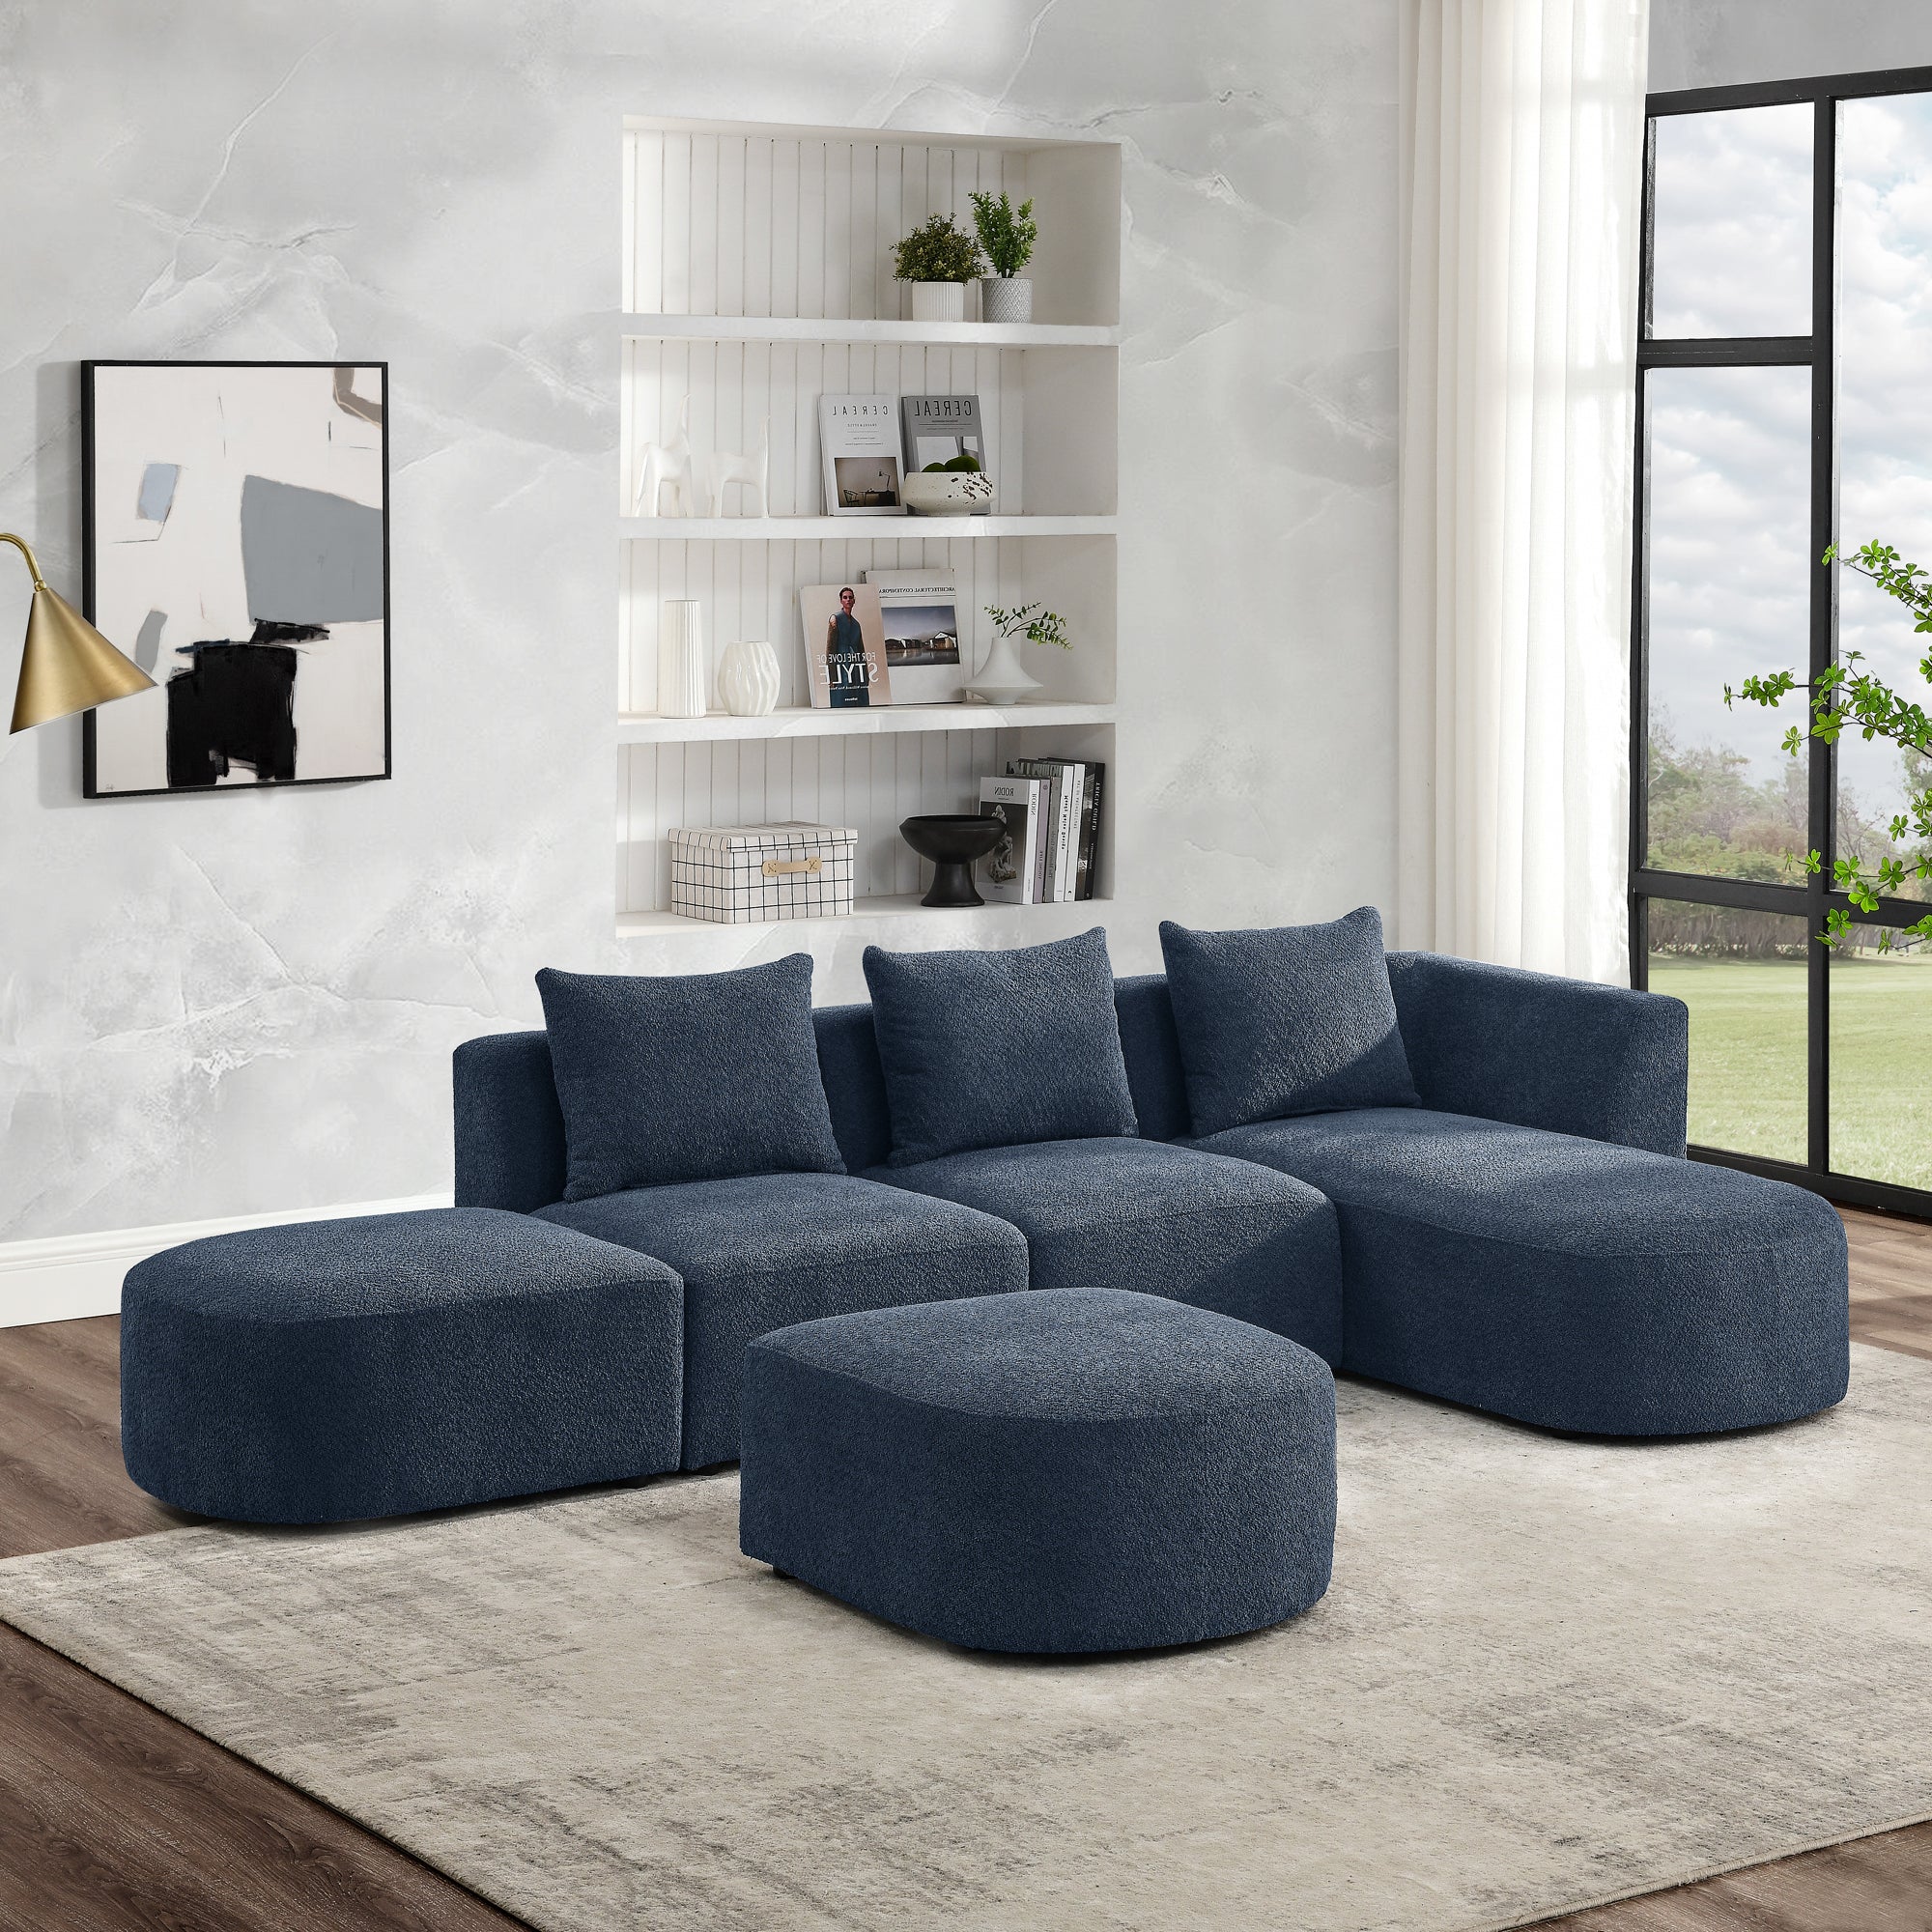 L-Shape Sectional Sofa, Right Chaise, Ottoman, Loop Yarn Fabric, Navy, Modular, DIY